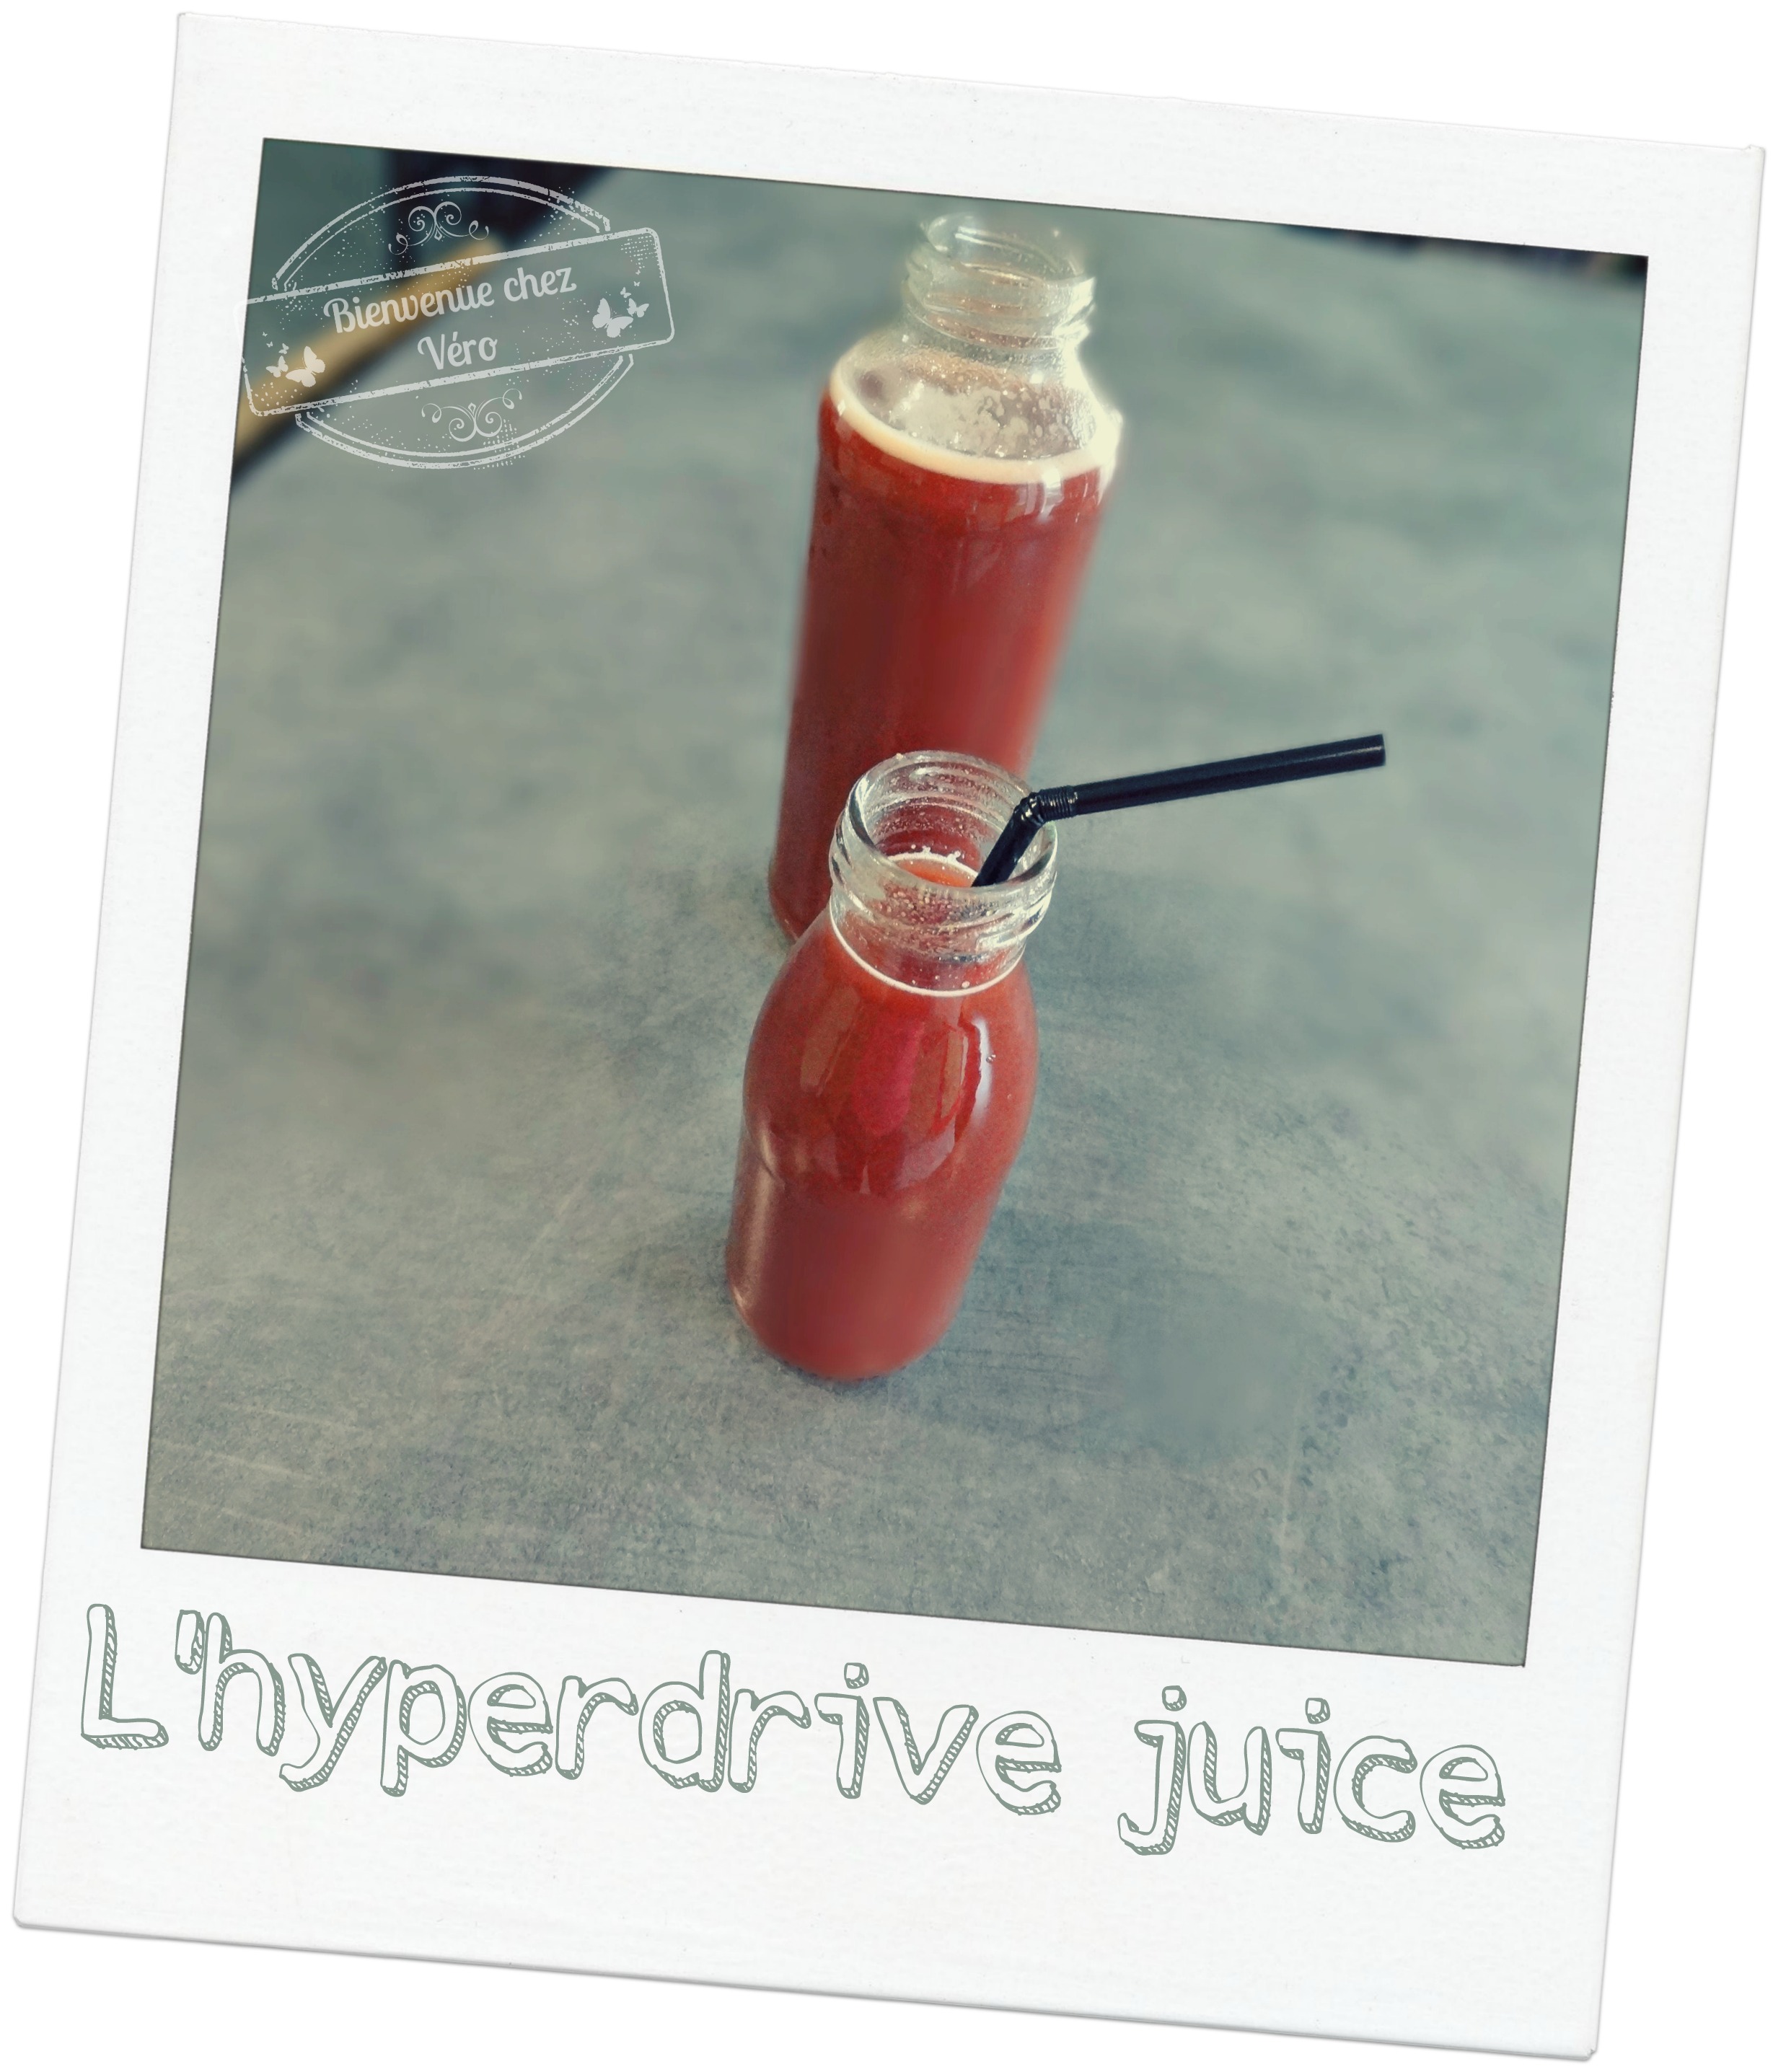 Hyperdrive juice